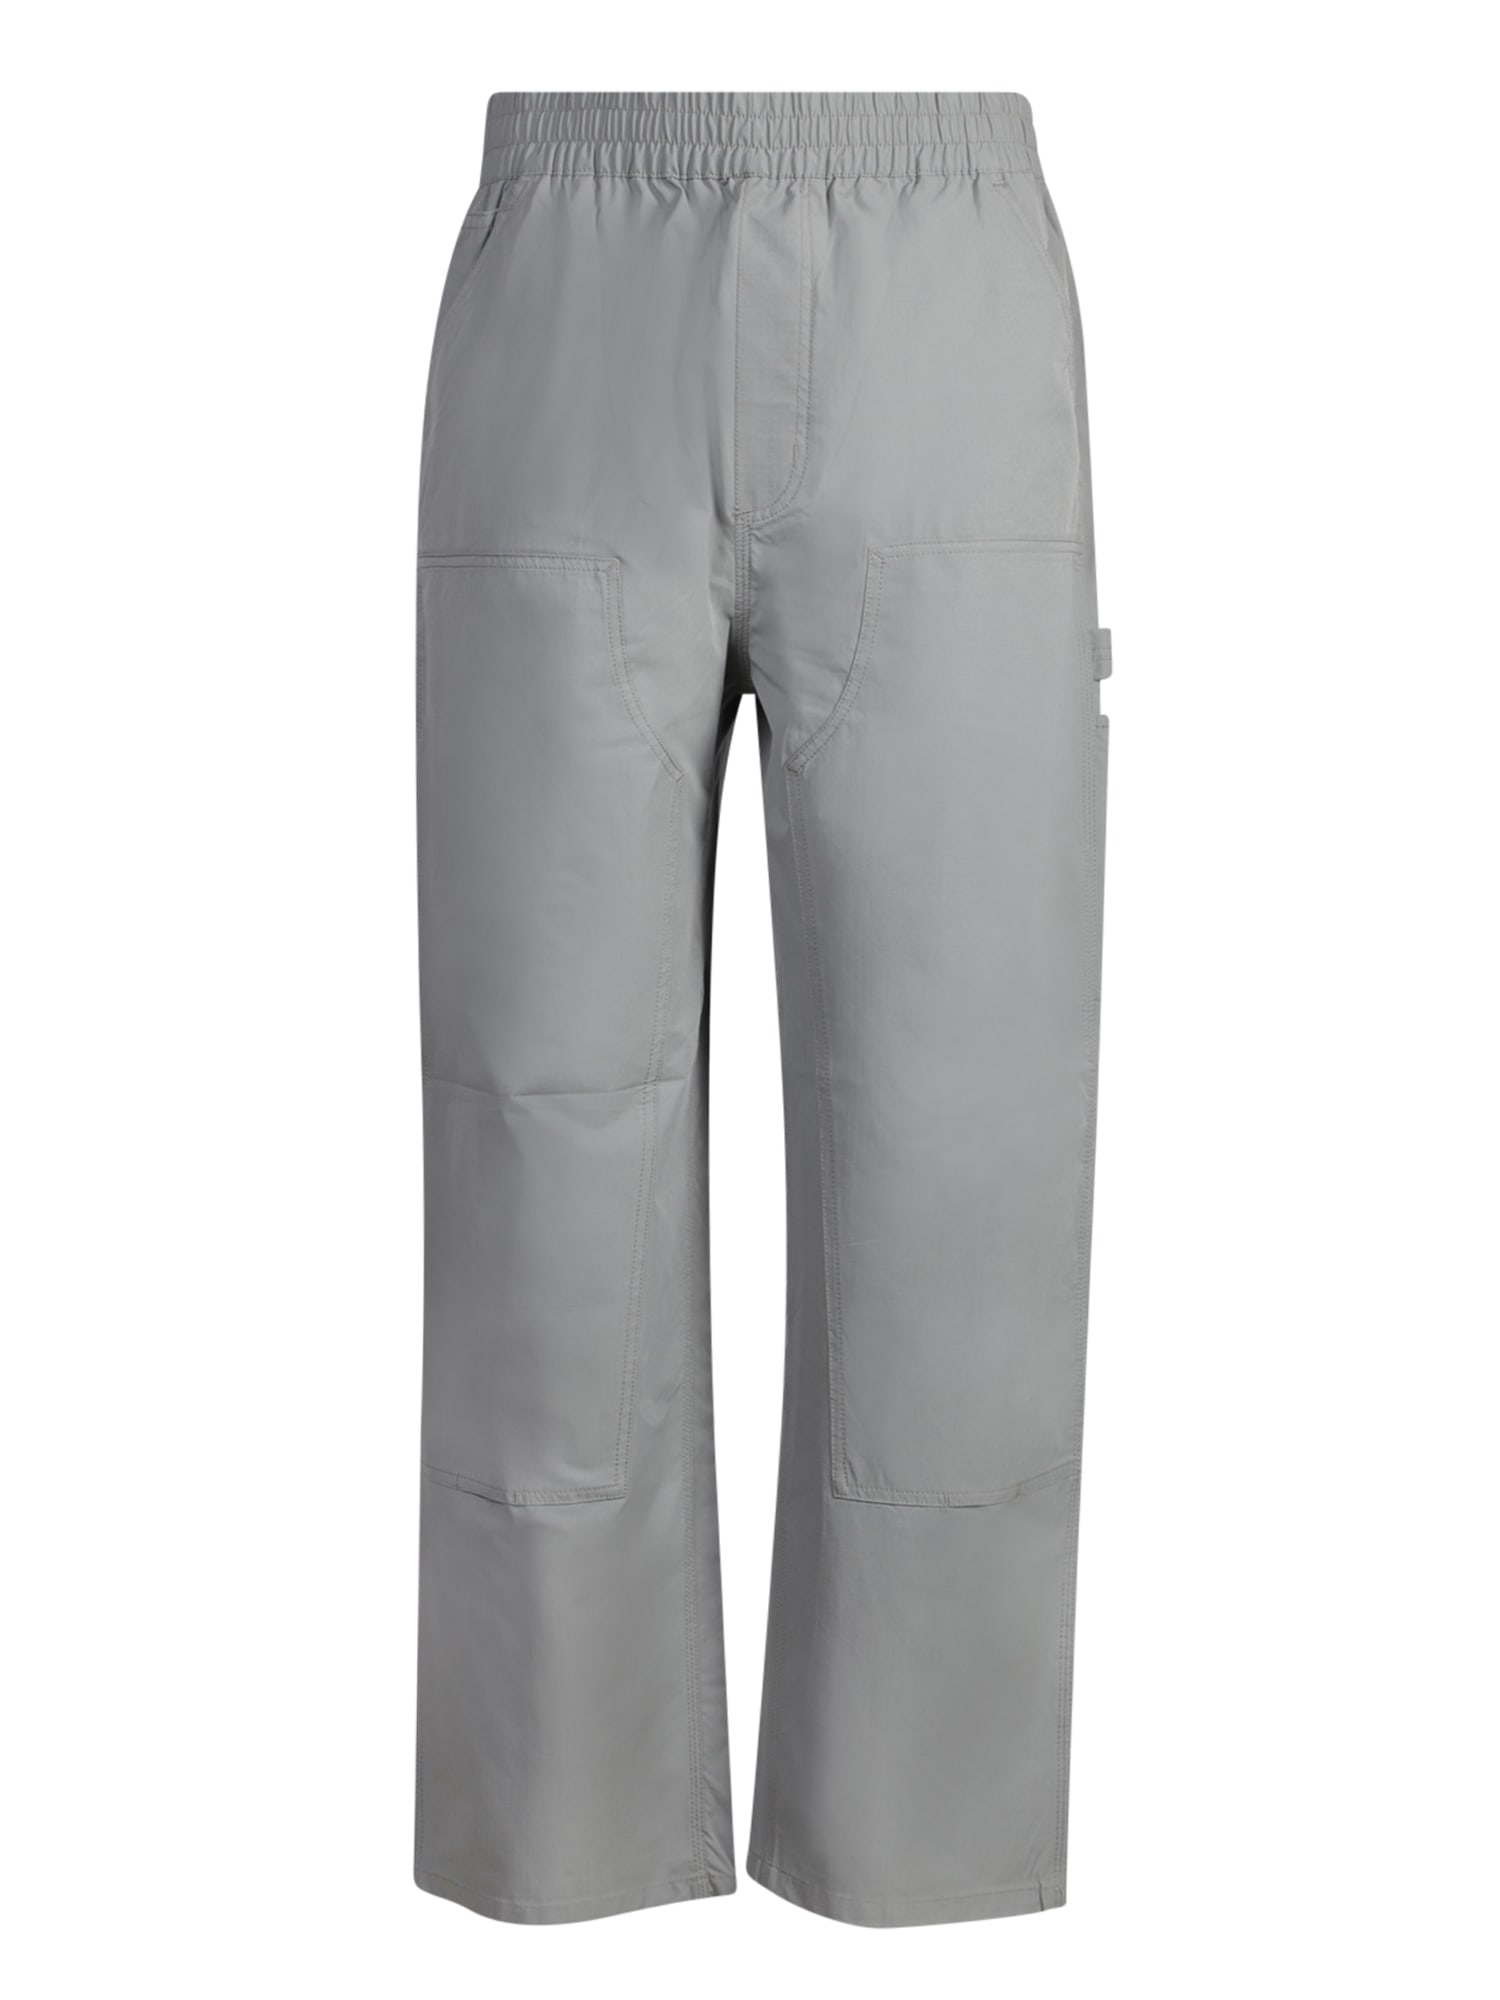 Shop Carhartt Montana Grey Trousers